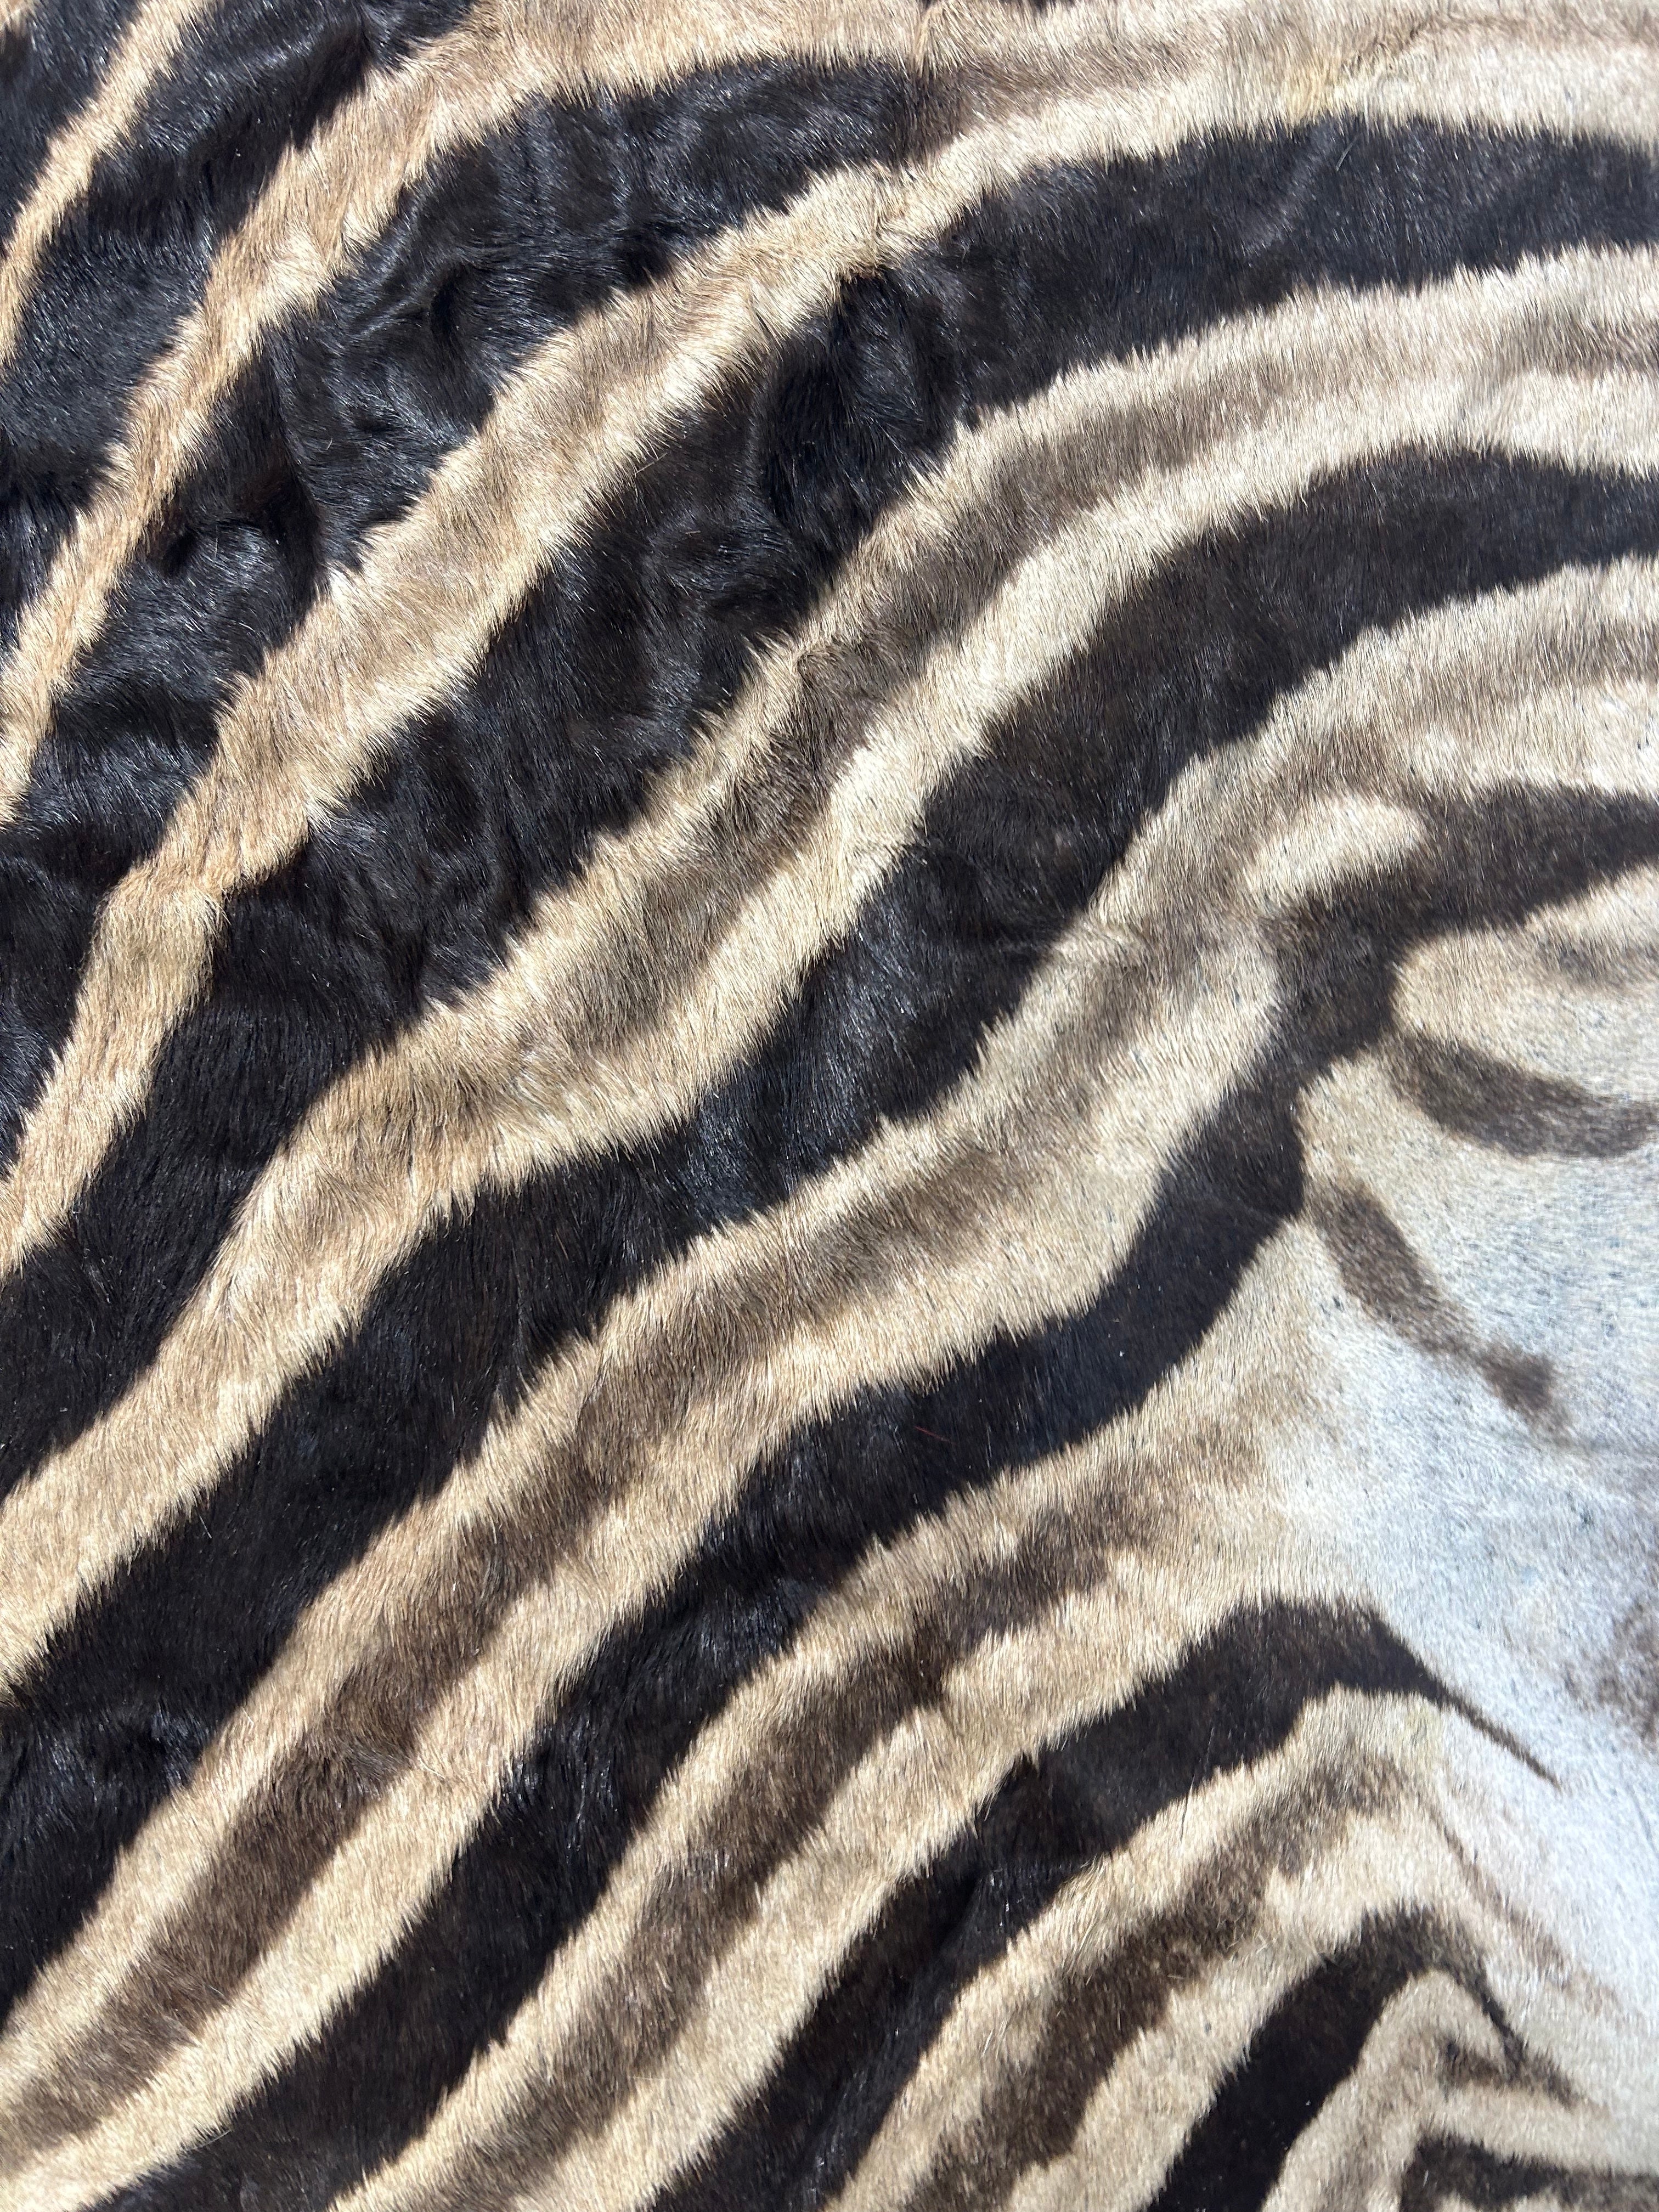 Real zebra skin Rug # 142- Size (7 3/4 X 7 feet) - Brand New Burchell's zebra hide